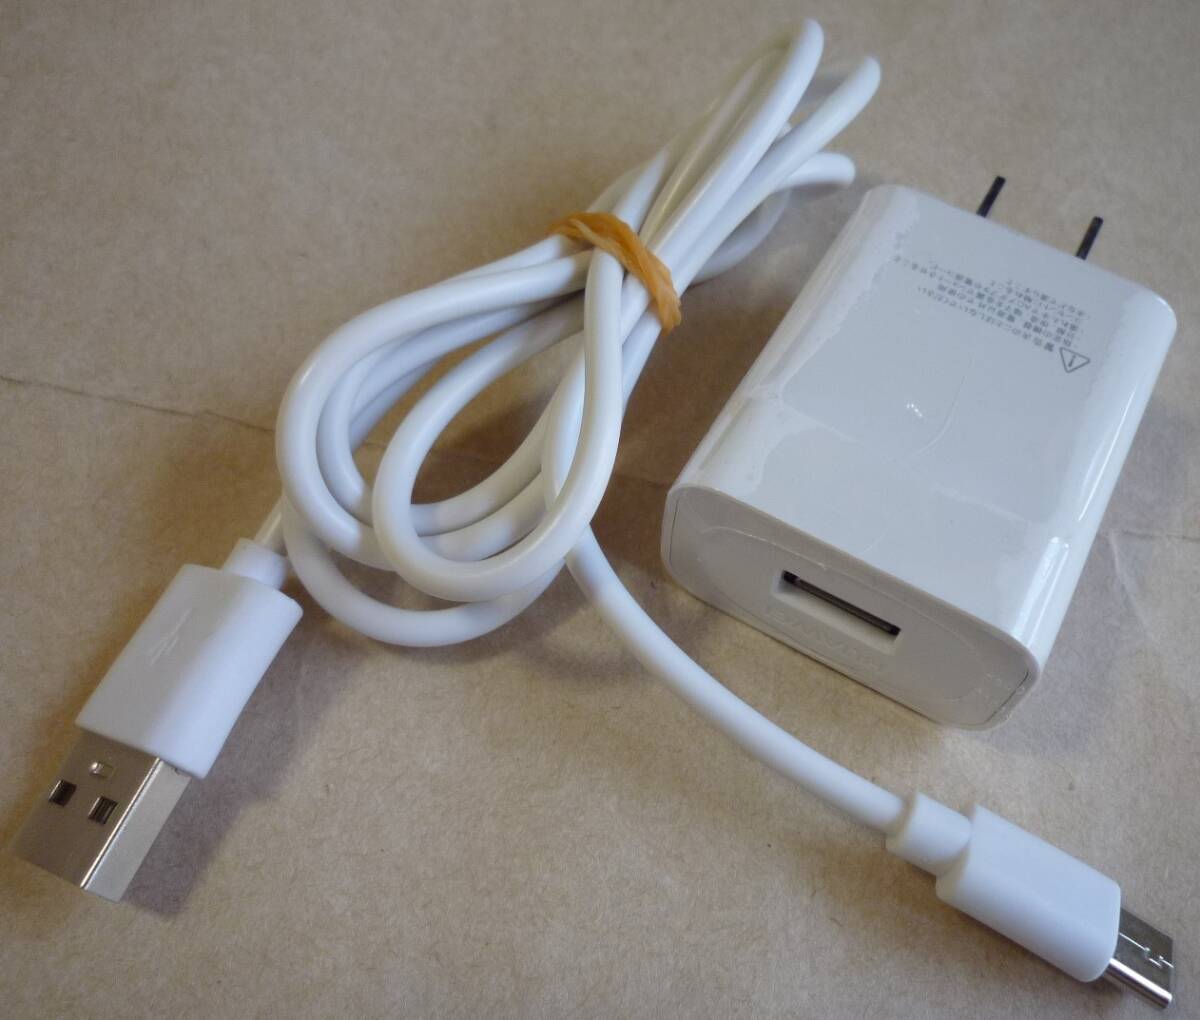 HUAWEI 充電器 ACアダプタ 保護フィルム付き USB充電器 HW-050200J01 5V 2A 白 ホワイト USB-Cケーブル付き の画像1